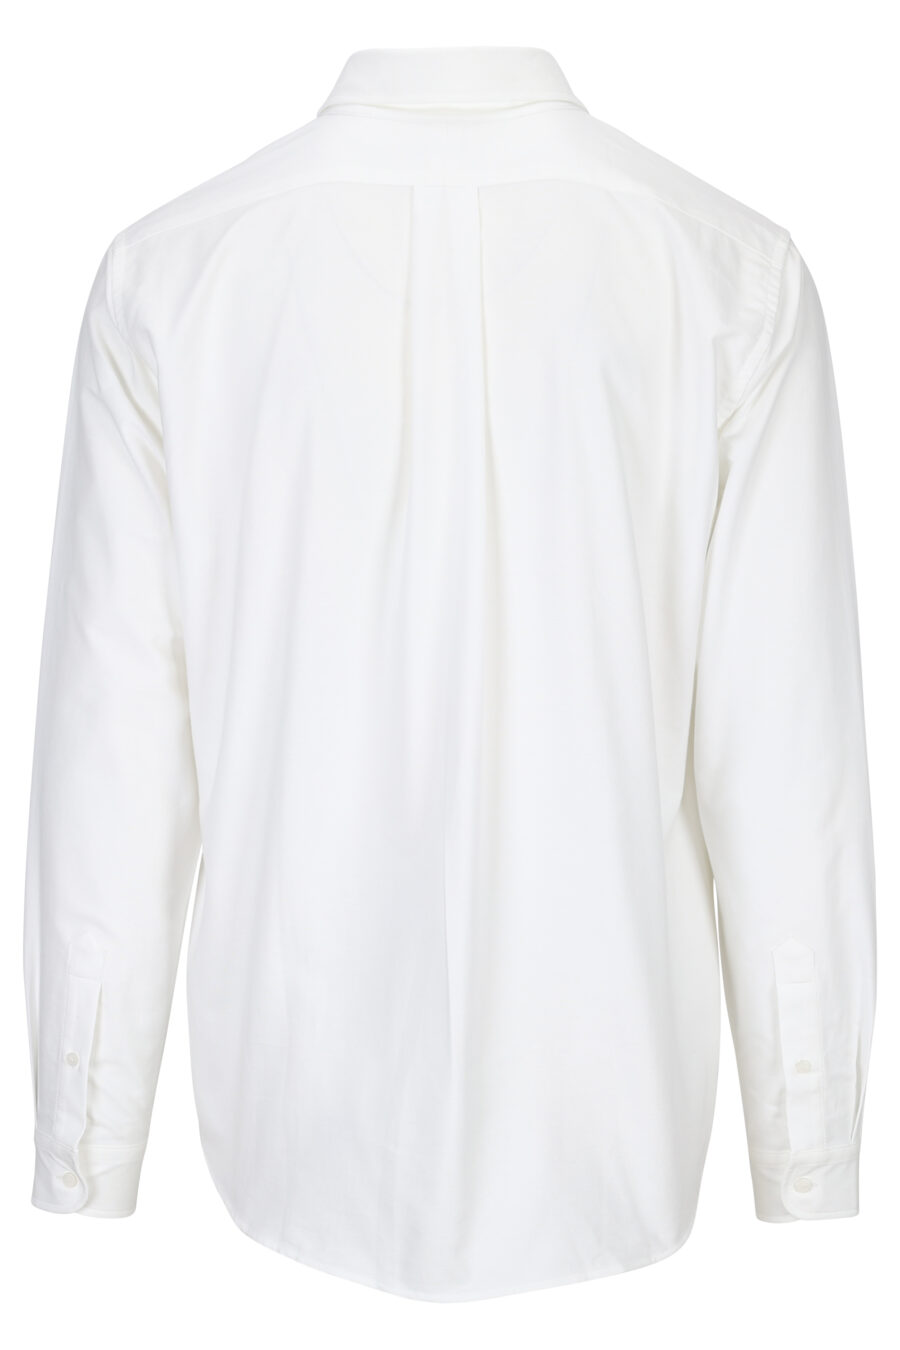 Camisa blanca con minilogo "boke flower" - 3612230543140 12